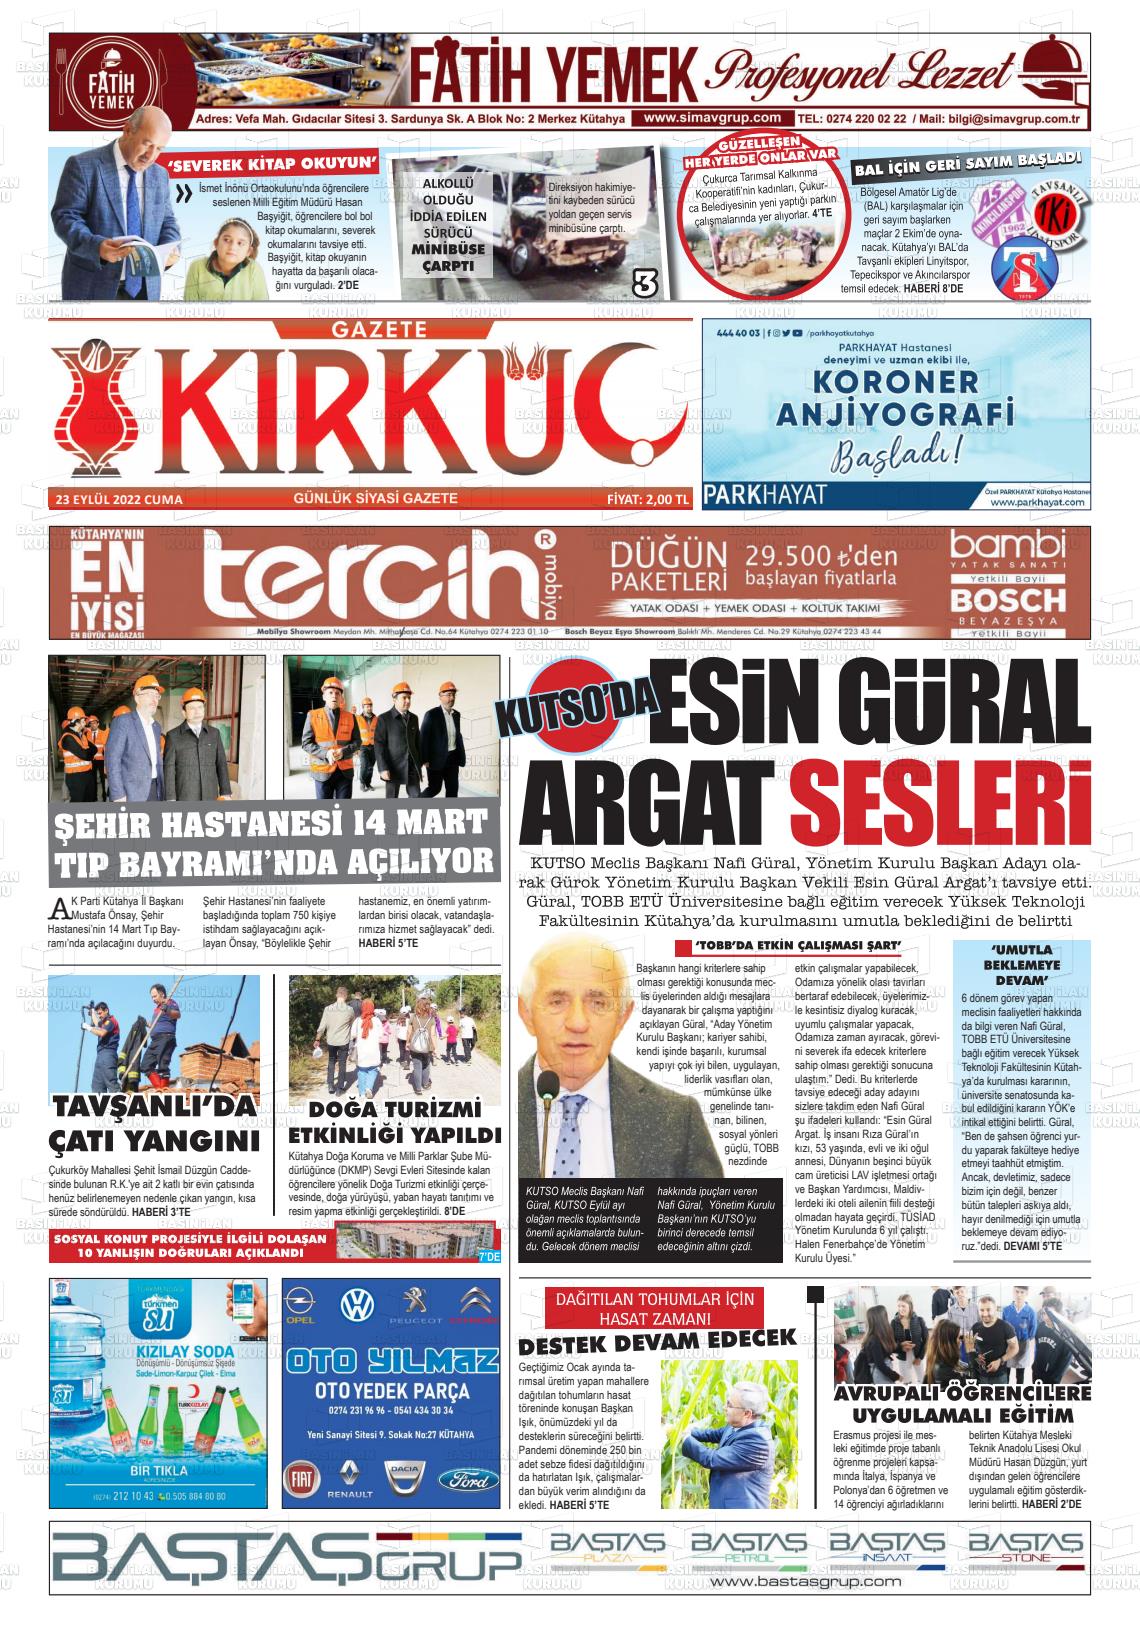 23 Eylül 2022 Gazete Kırküç Gazete Manşeti